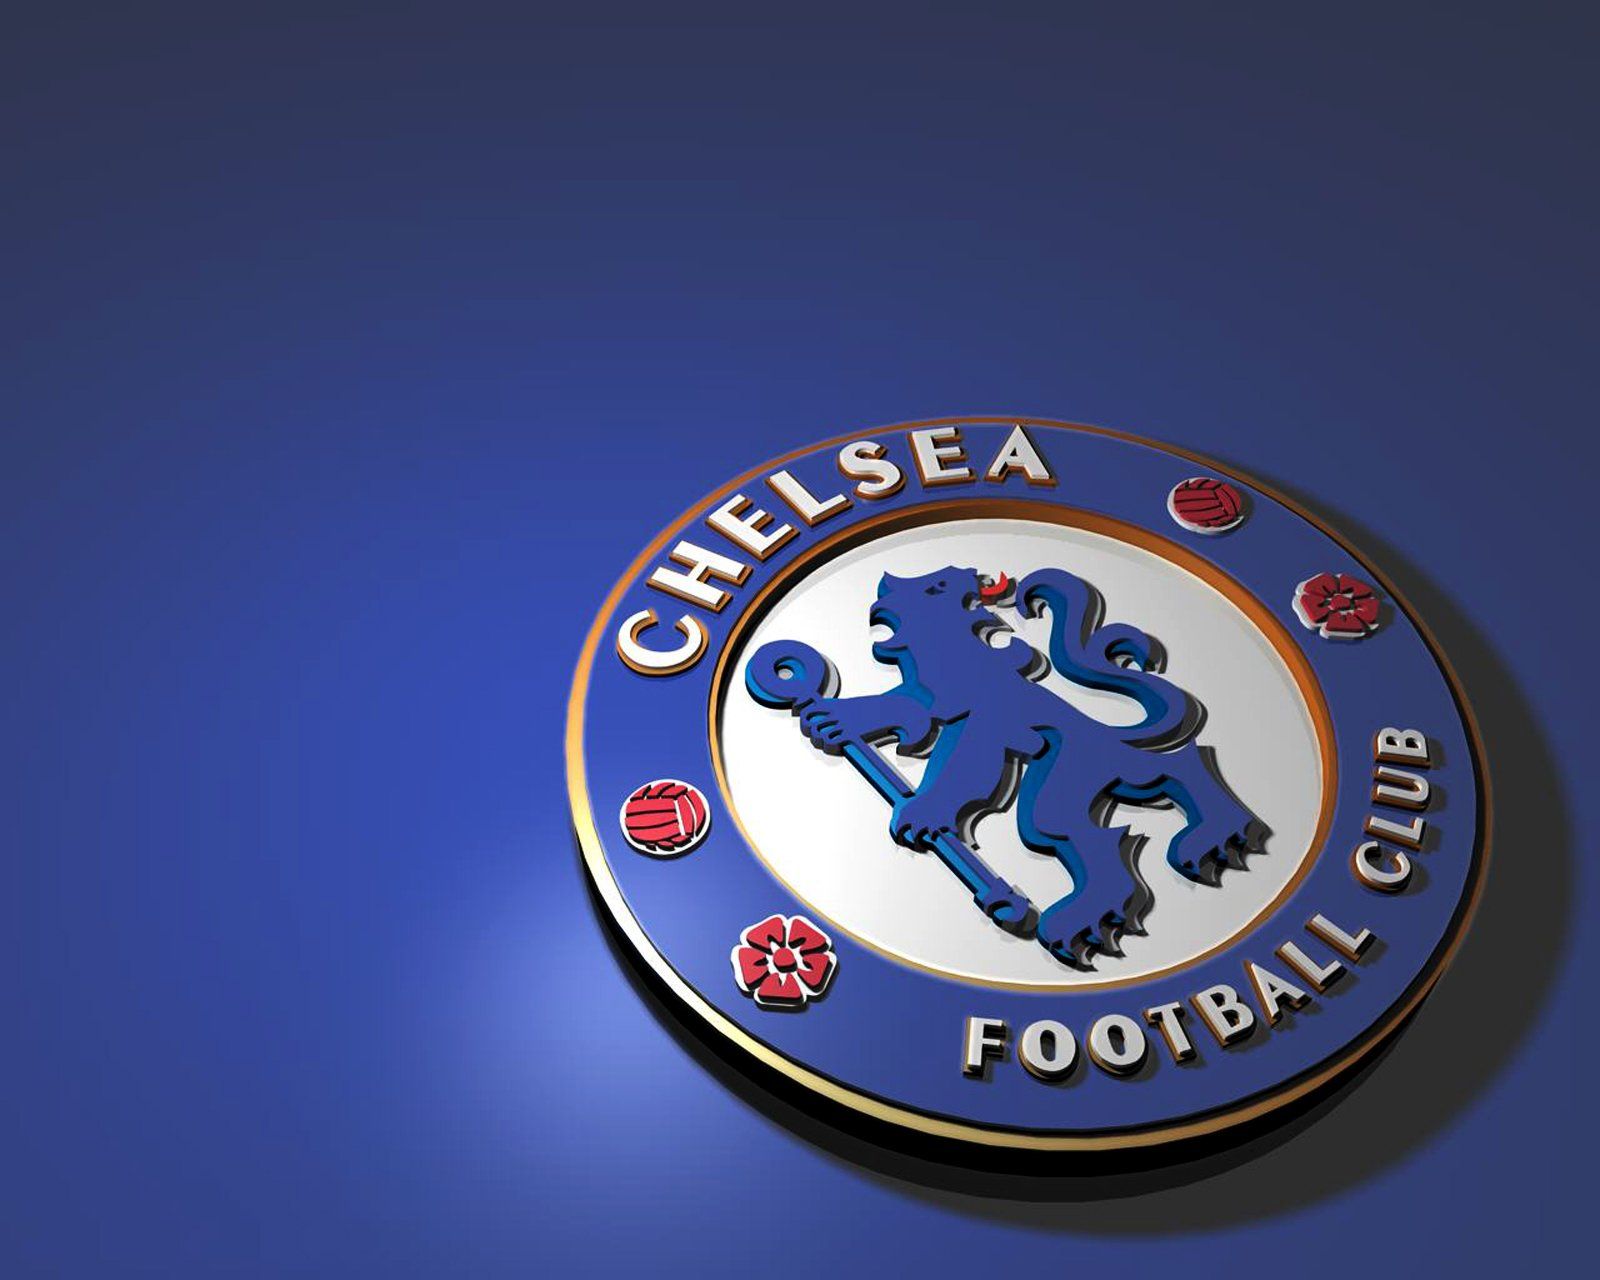 Chelsea Hintergrundbild 1600x1280. Chelsea FC Wallpaper Free Download